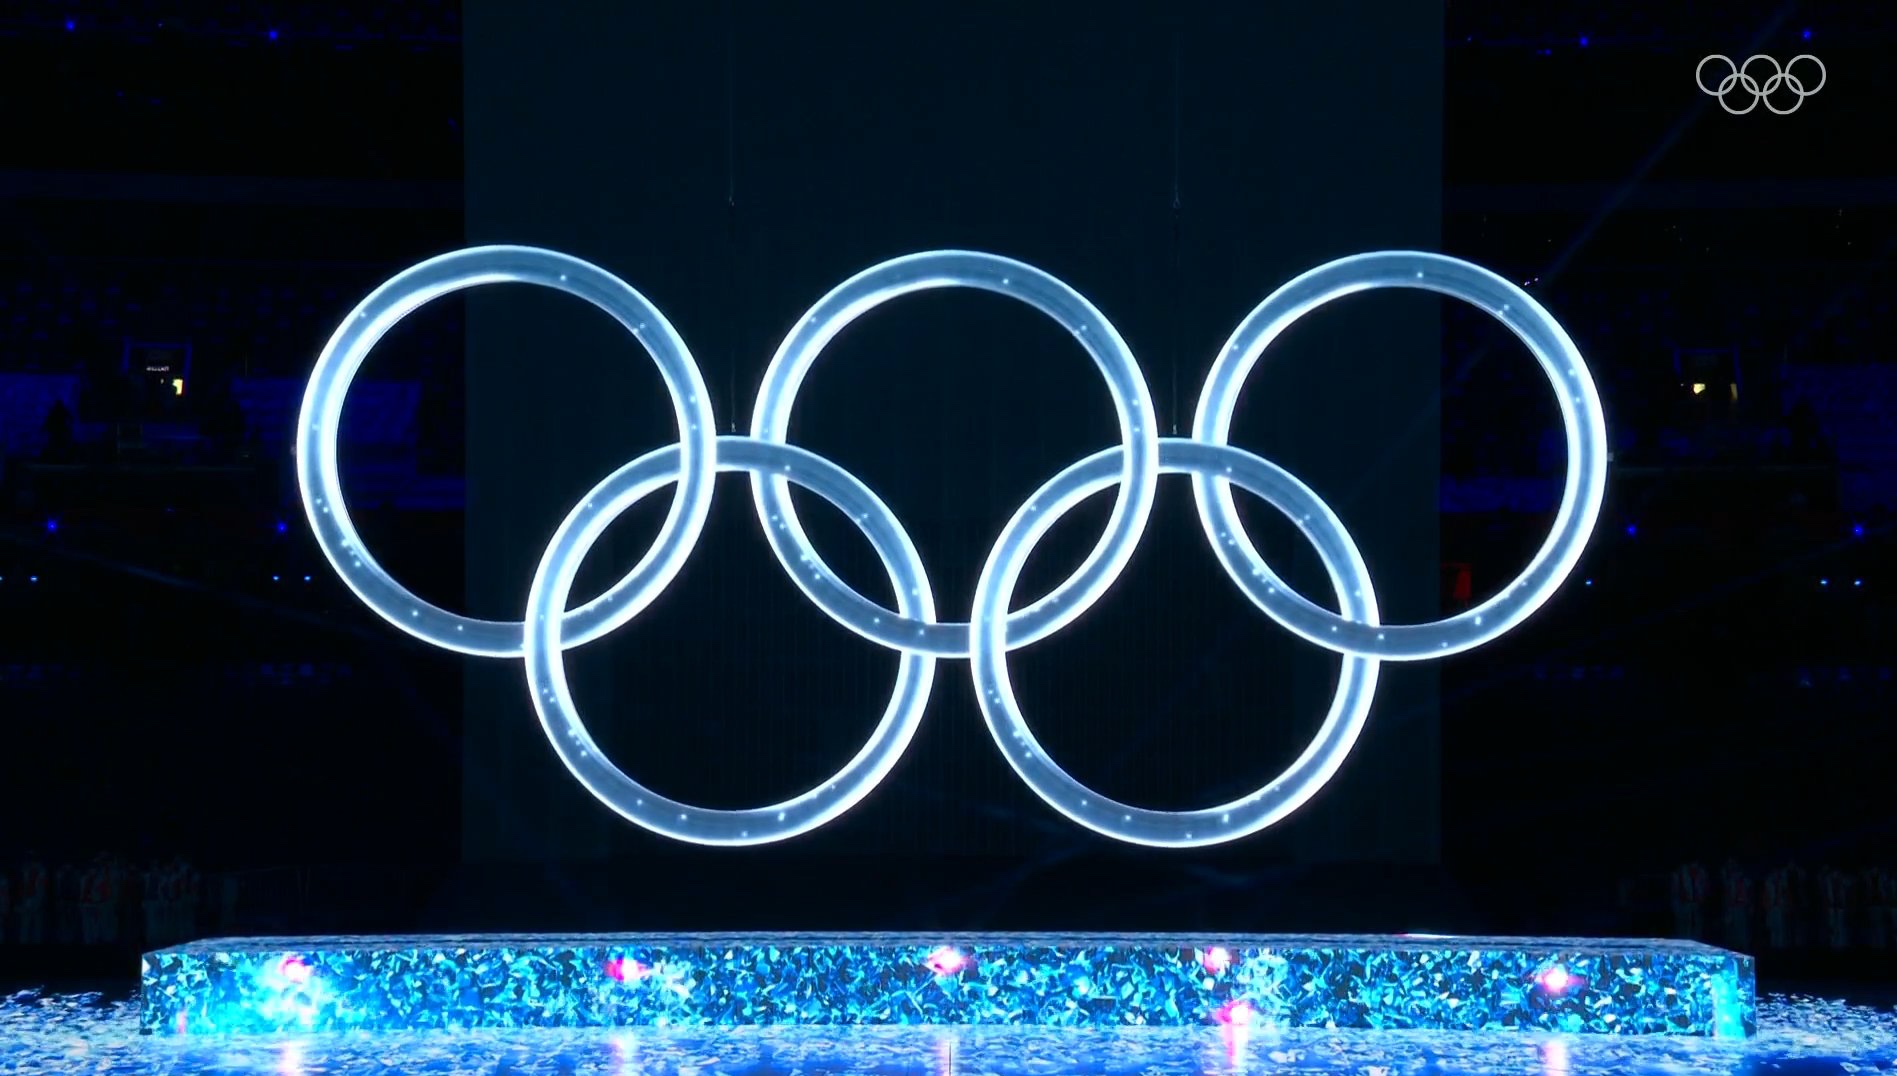 Beijing 2022 Winter Olympics Opening Ceremony